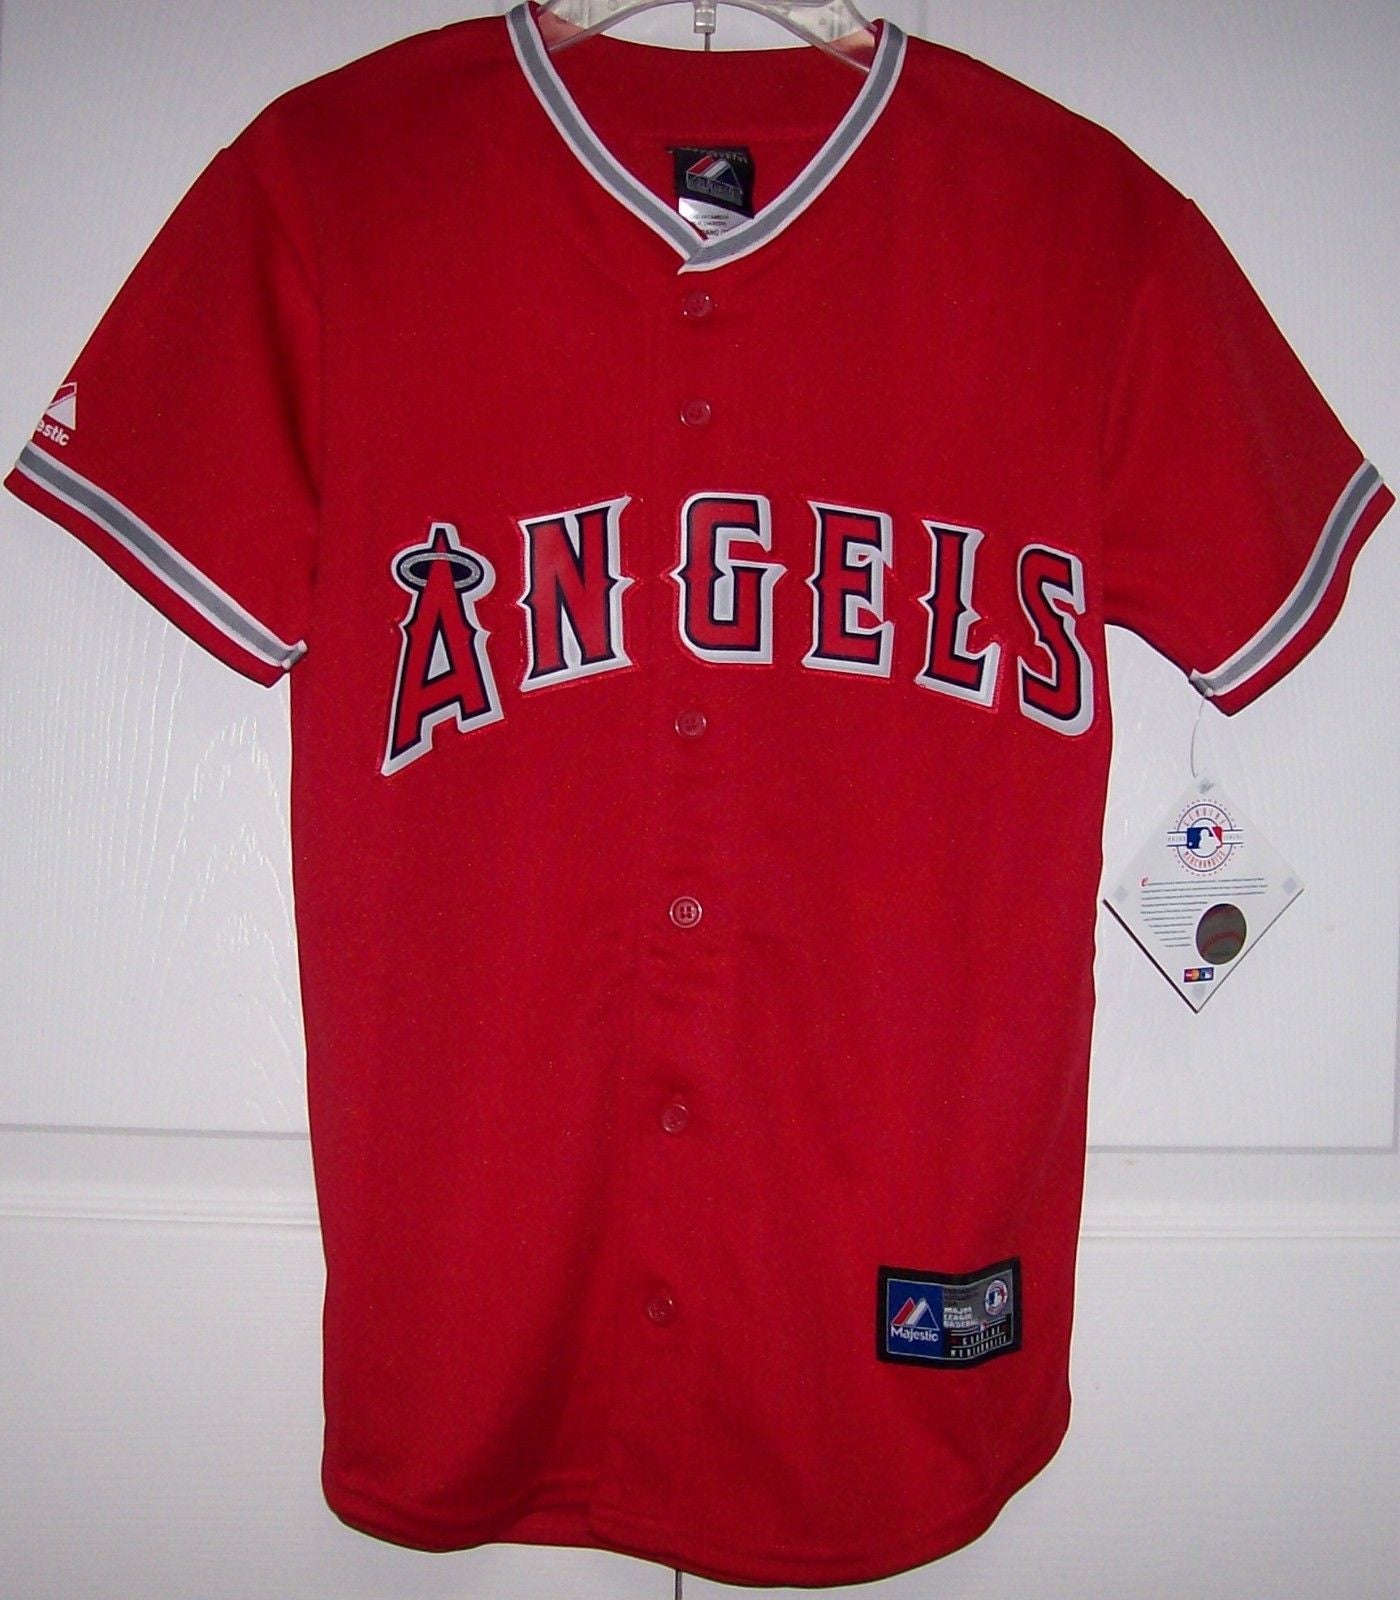 toddler angels baseball shirt